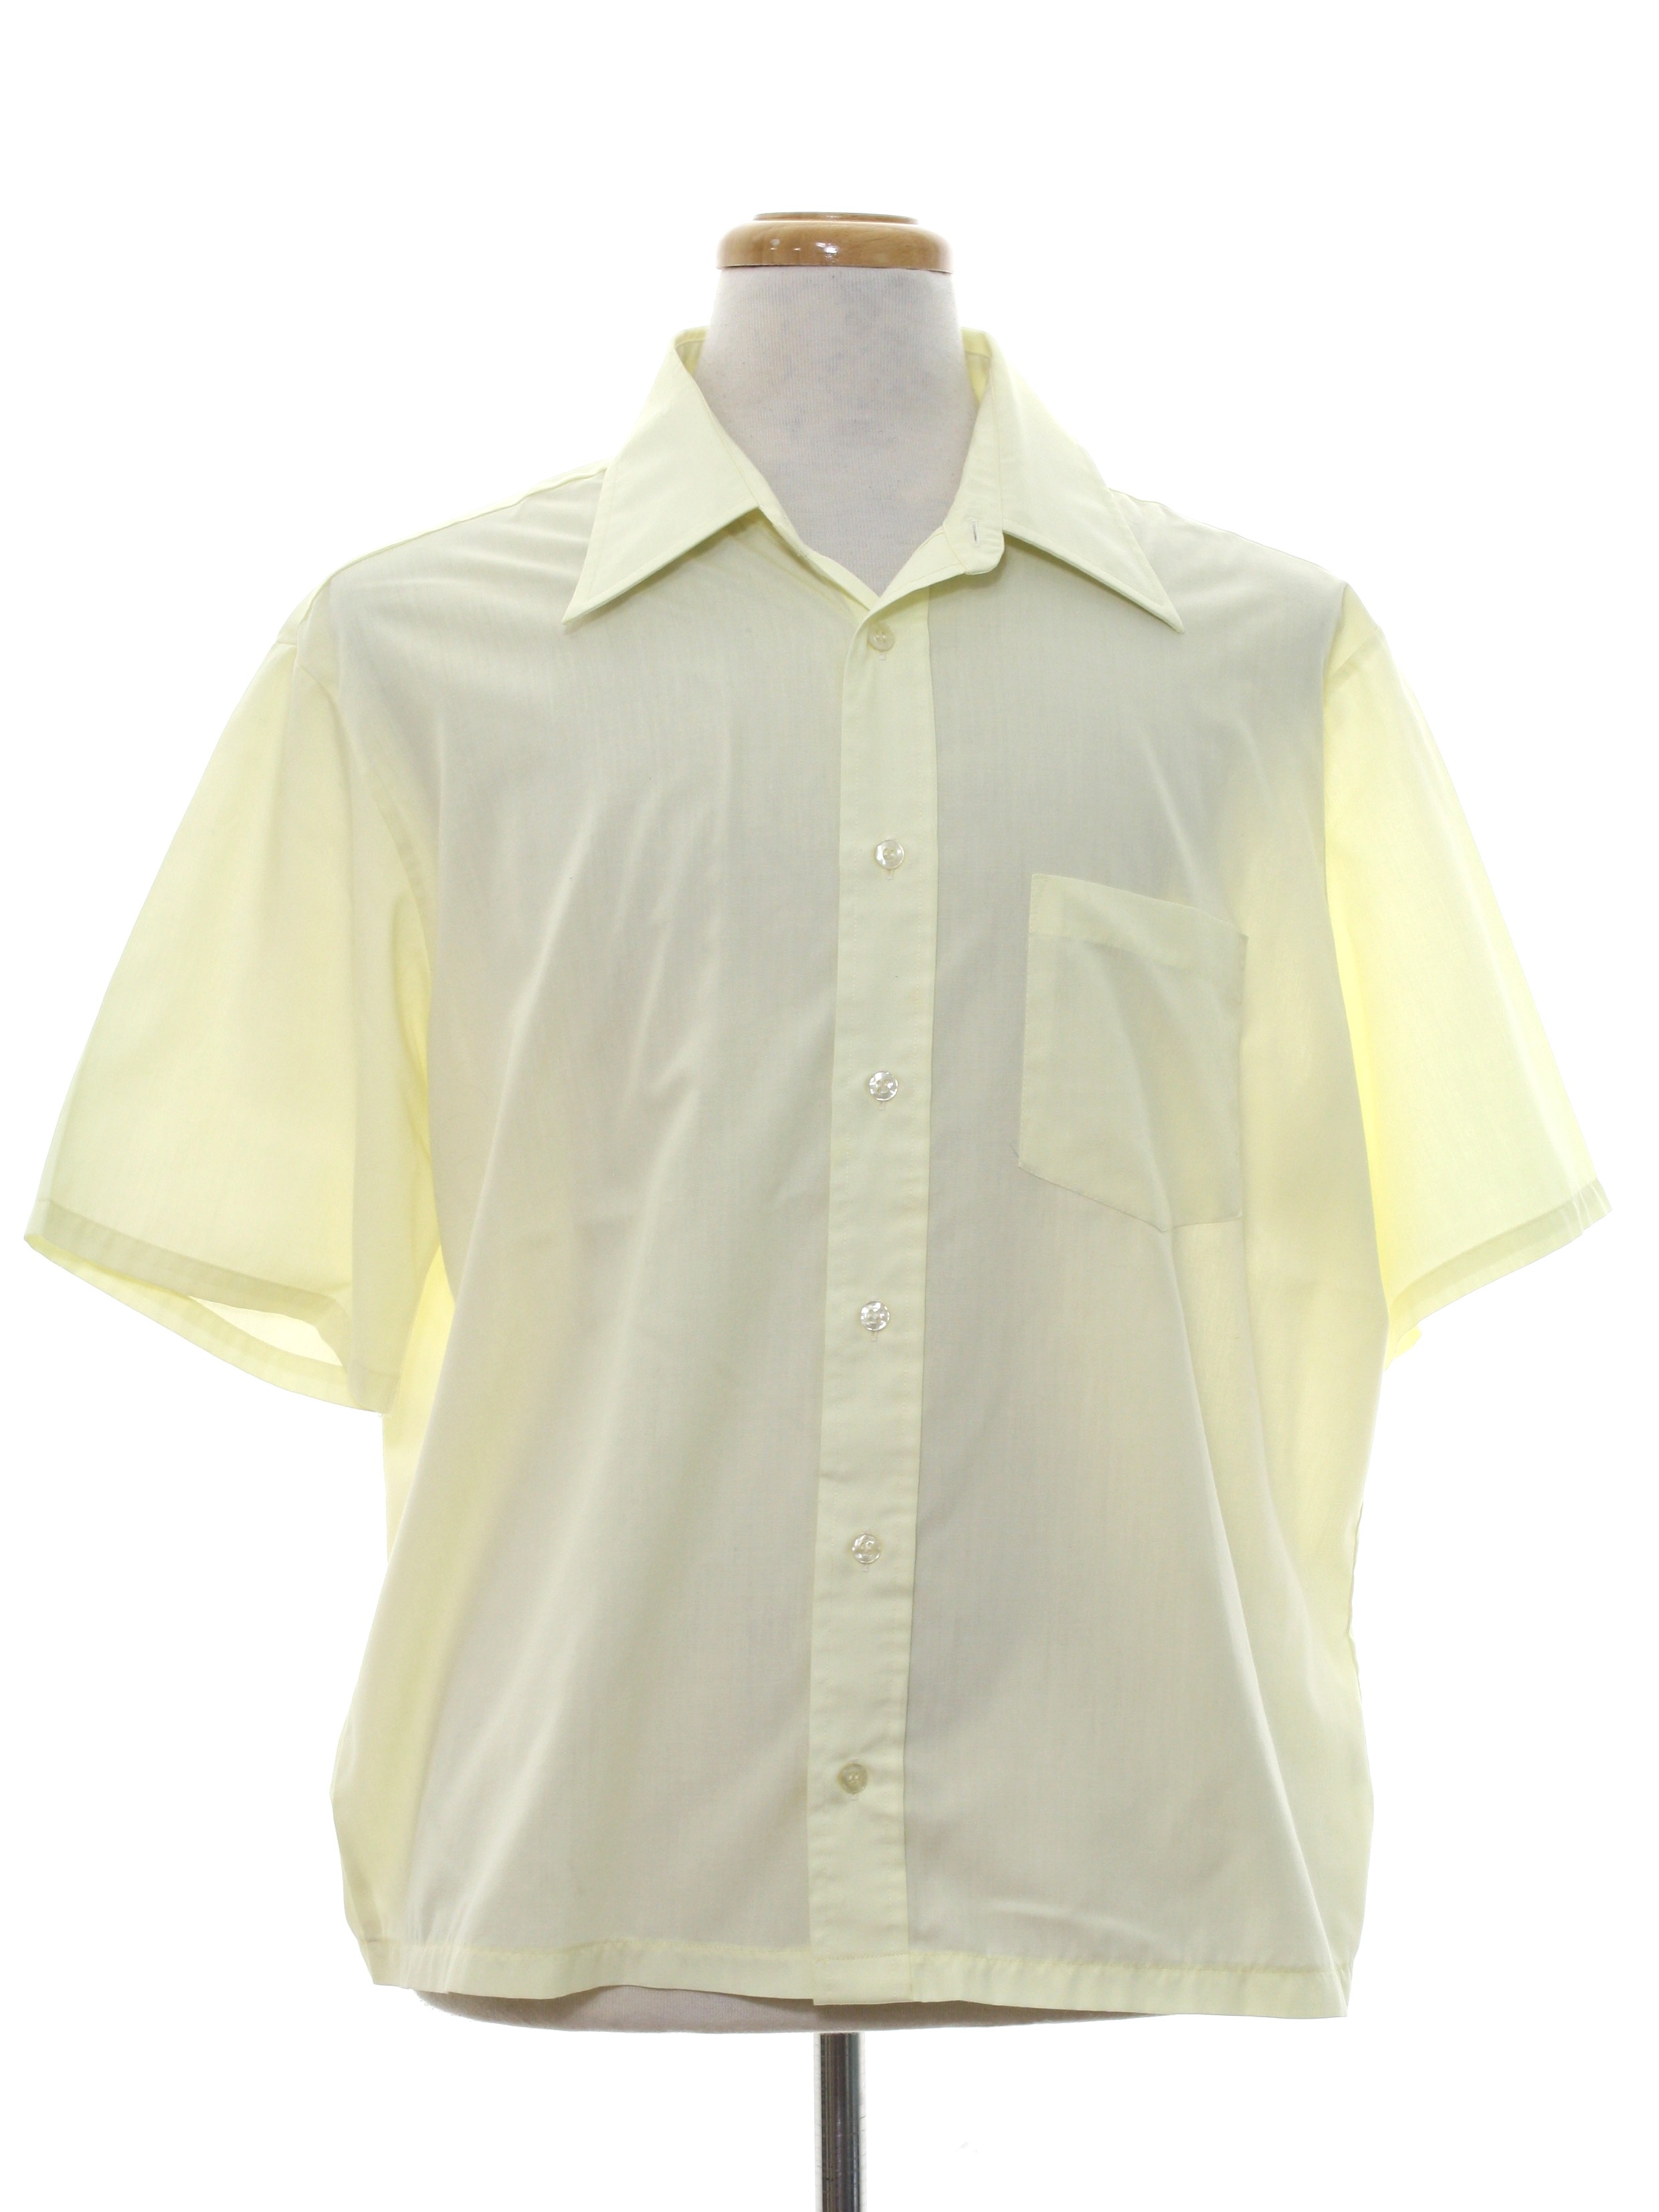 Retro 1970's Shirt (JC Penney) : 70s -JC Penney- Mens pale yellow ...